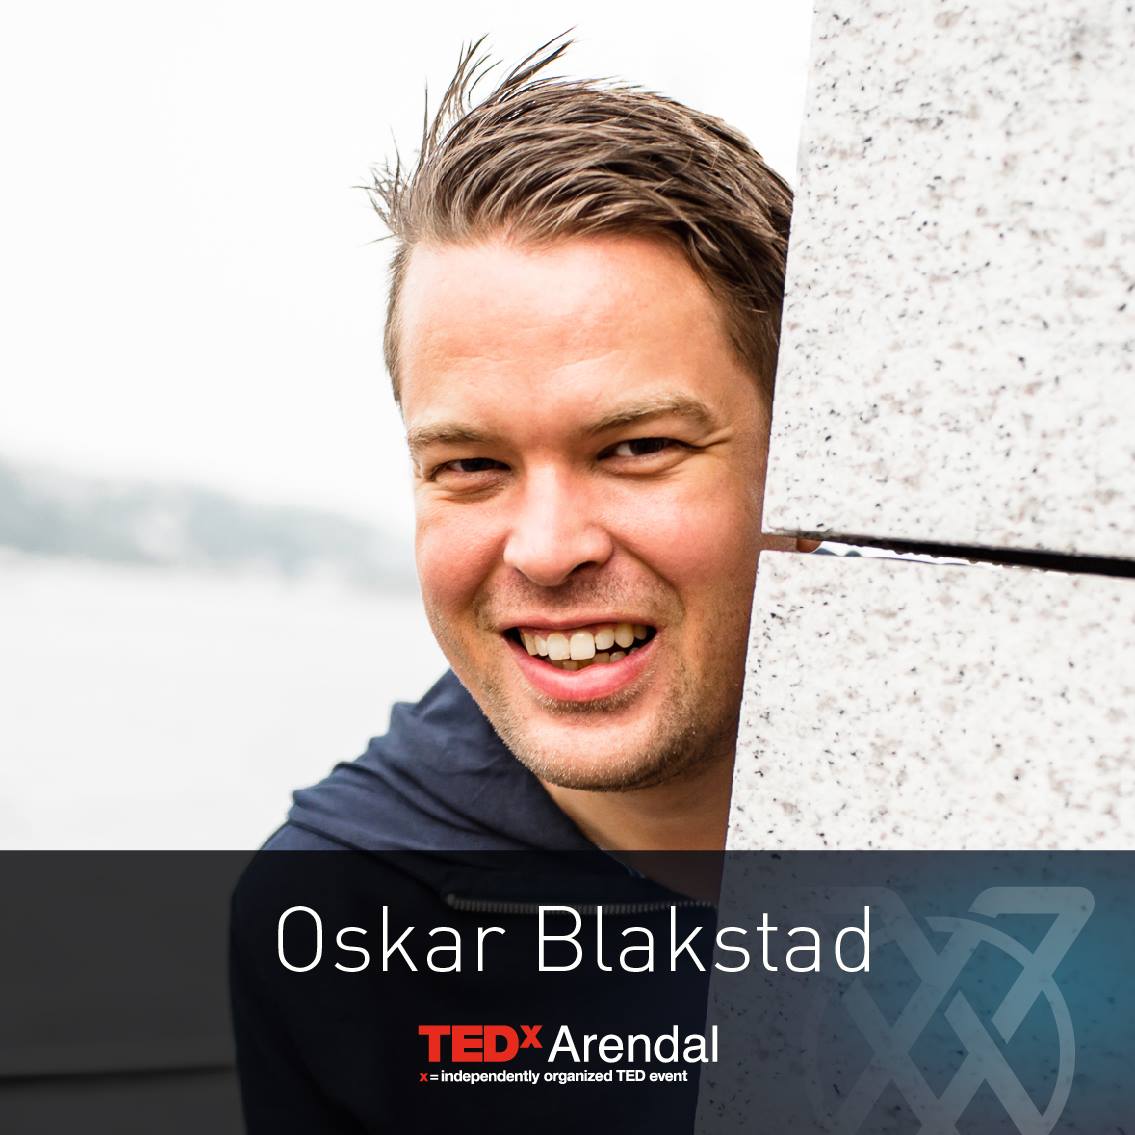 Oskar Blakstad